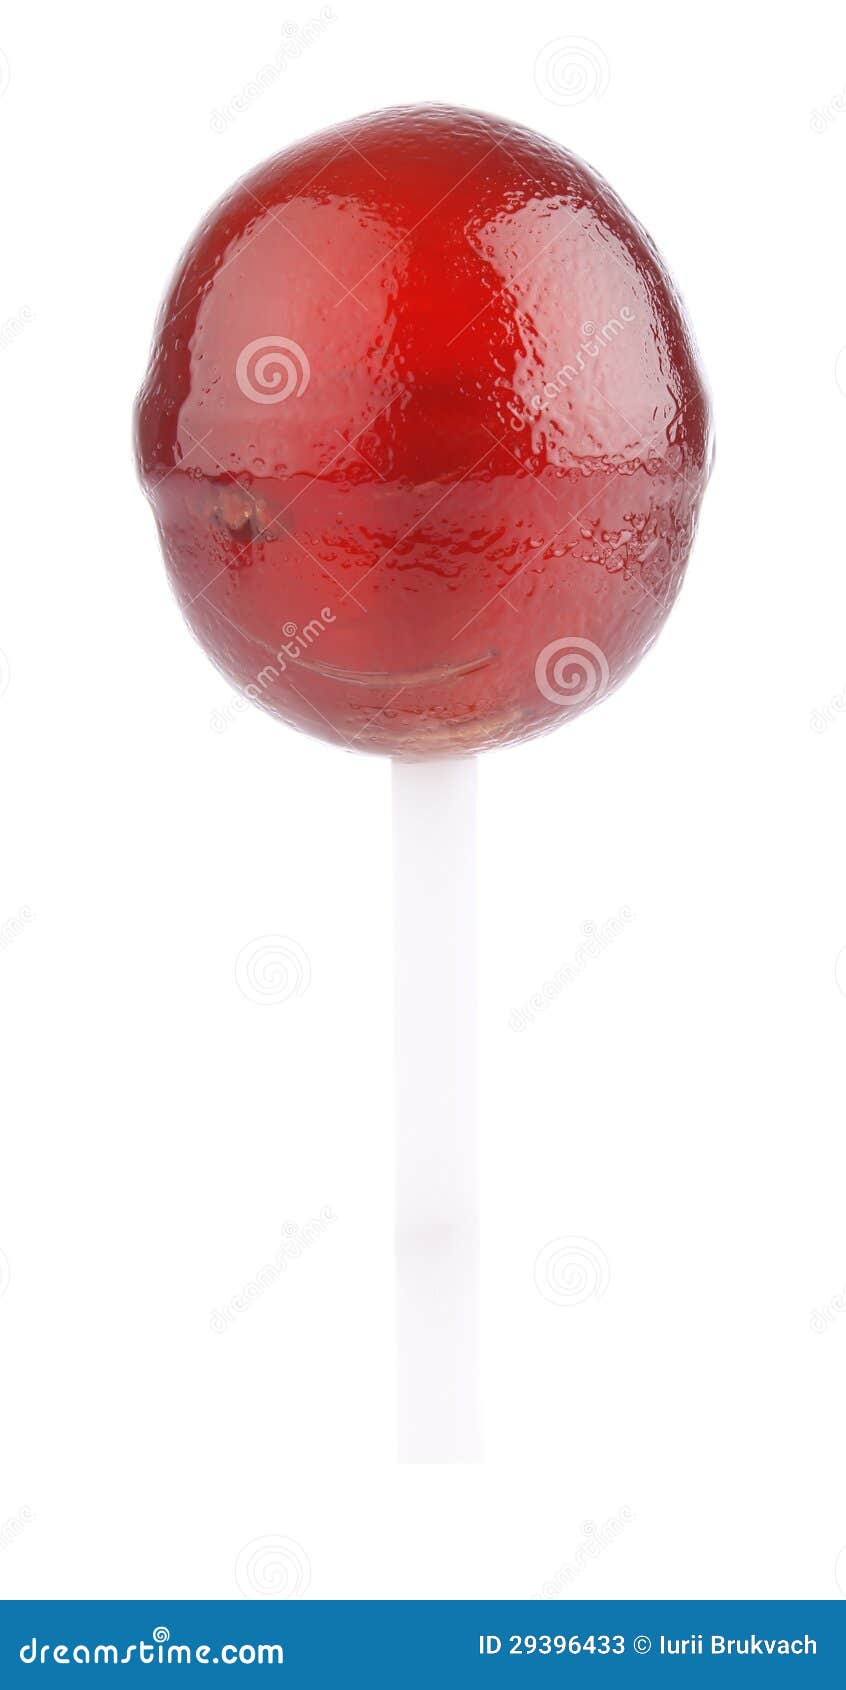 lollipop with cola flavour